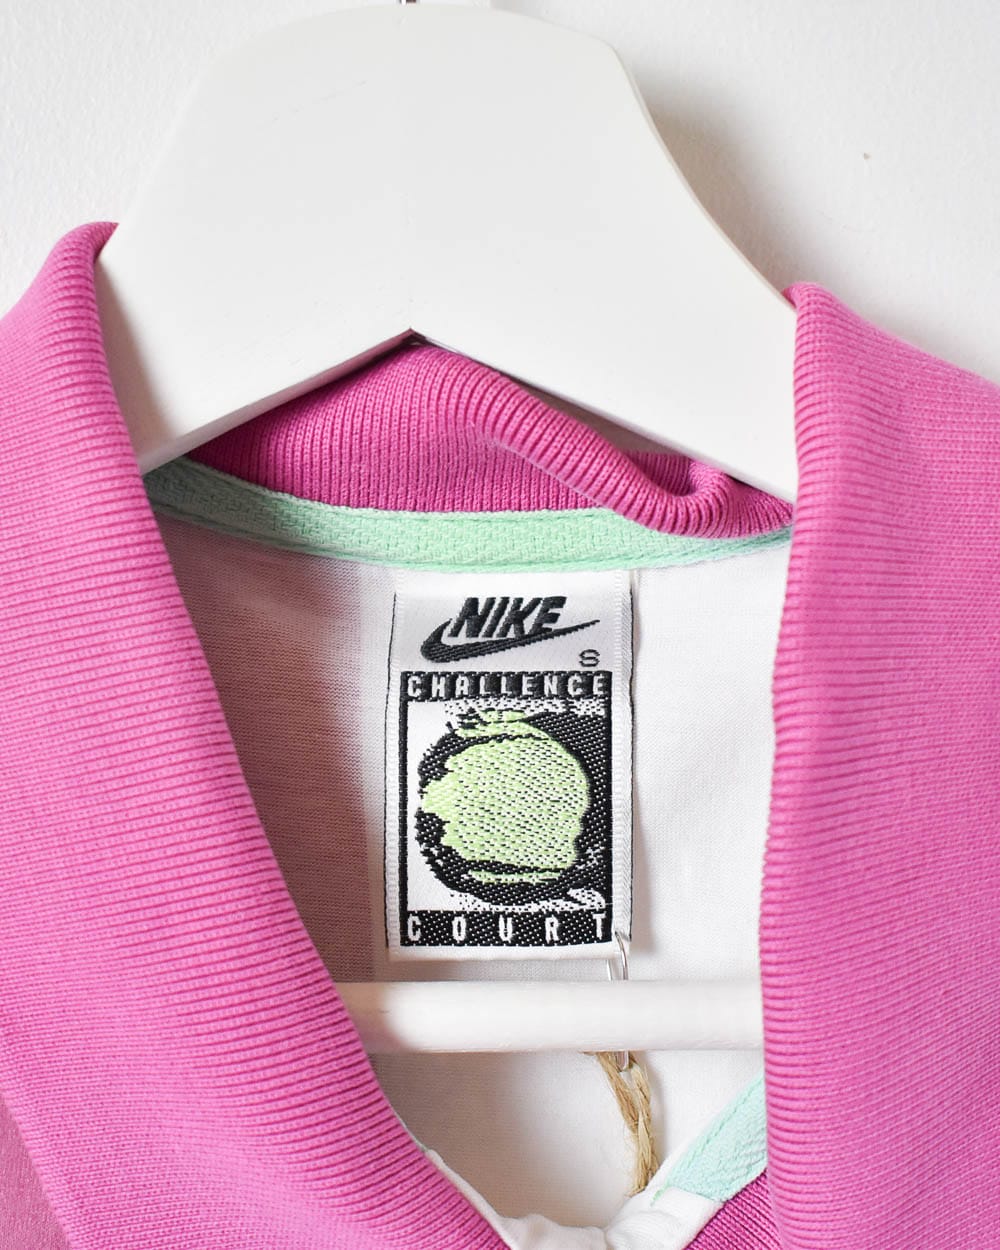 White Nike Challenge Court Polo Shirt - Small